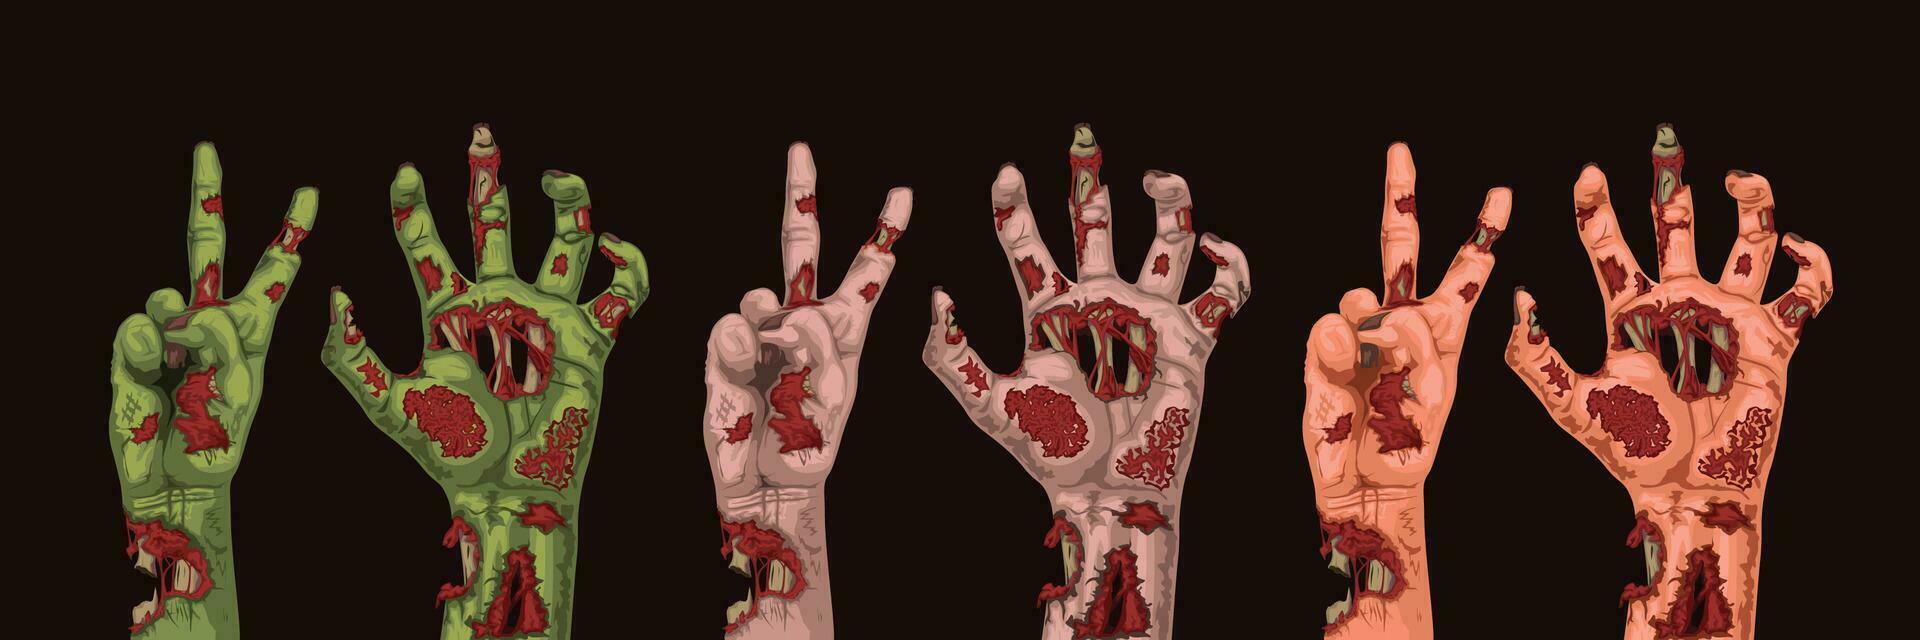 diferente colores zombi manos vector